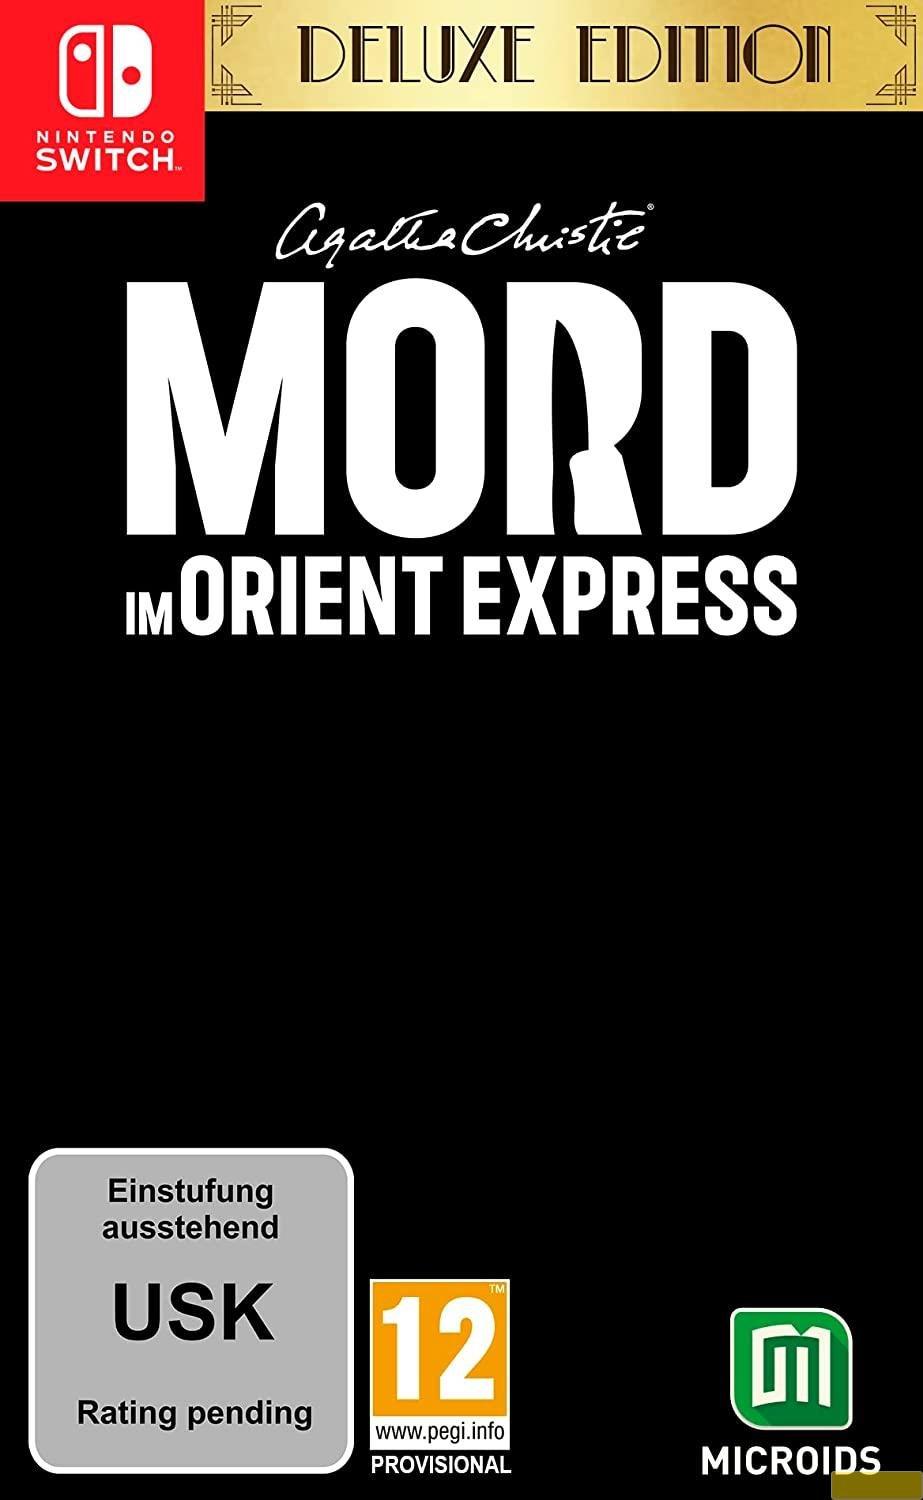 acheter Mord MICROIDS Edition Express im | Christie: en MANOR - ligne Agatha Orient Deluxe -